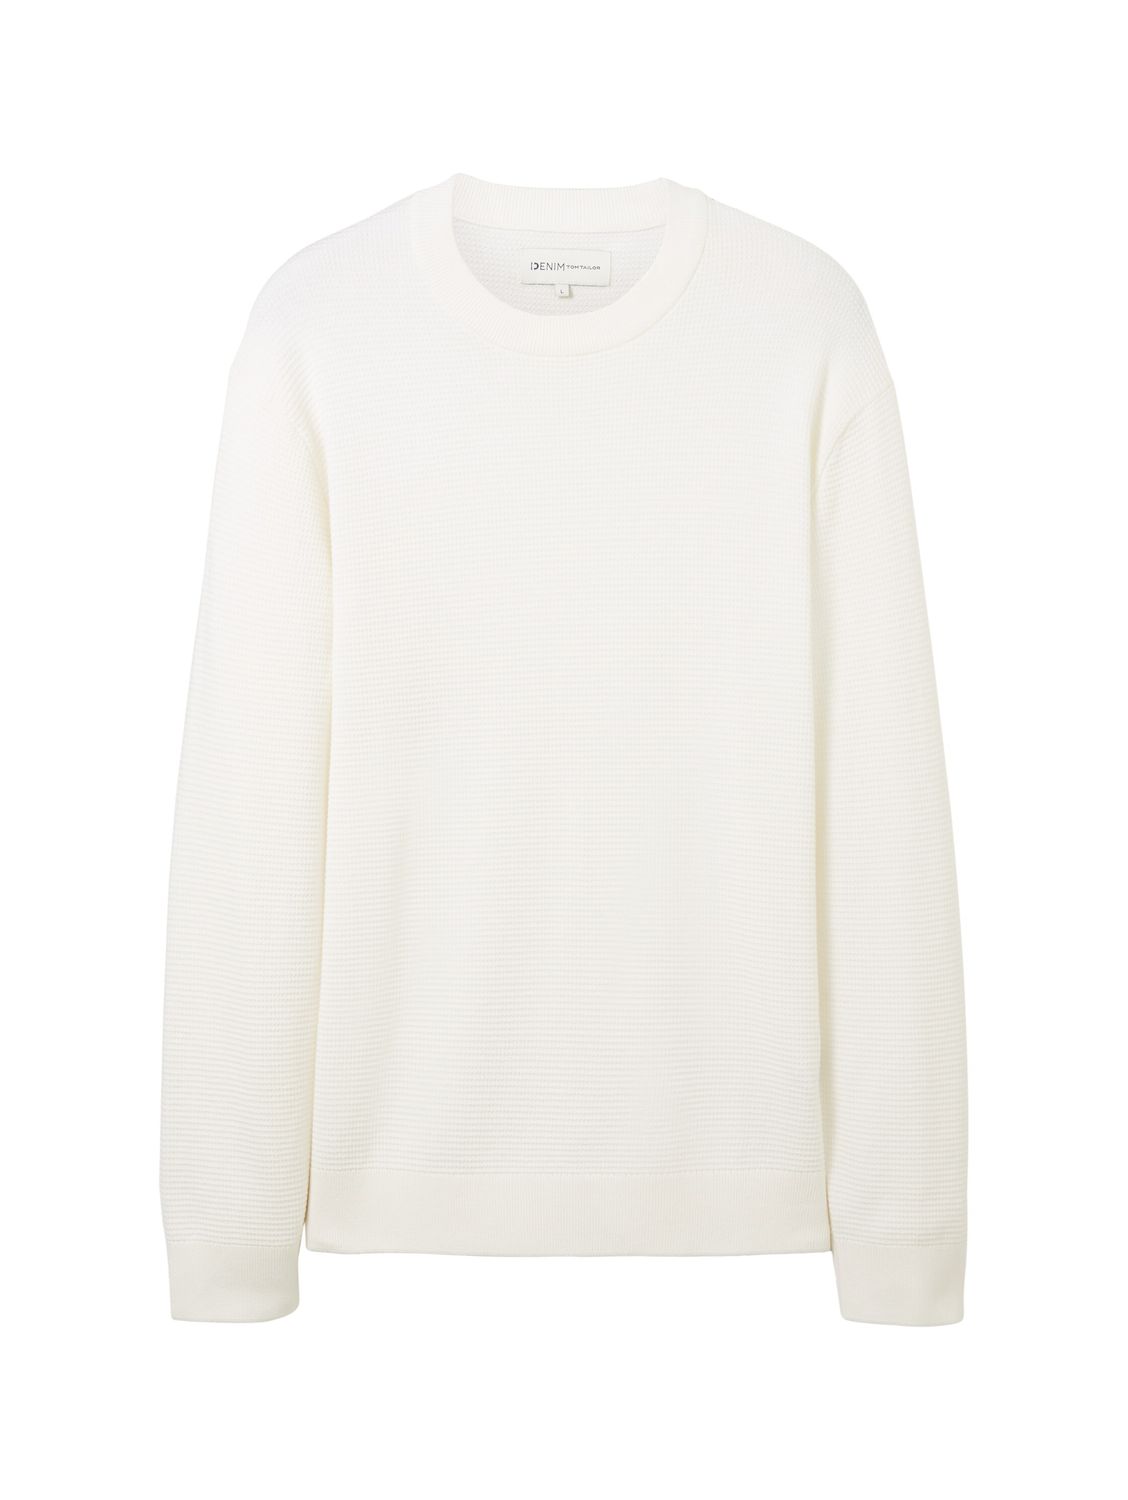 Пуловер TOM TAILOR Denim STRUCTURED BASIC, белый лонгслив tom tailor размер l белый